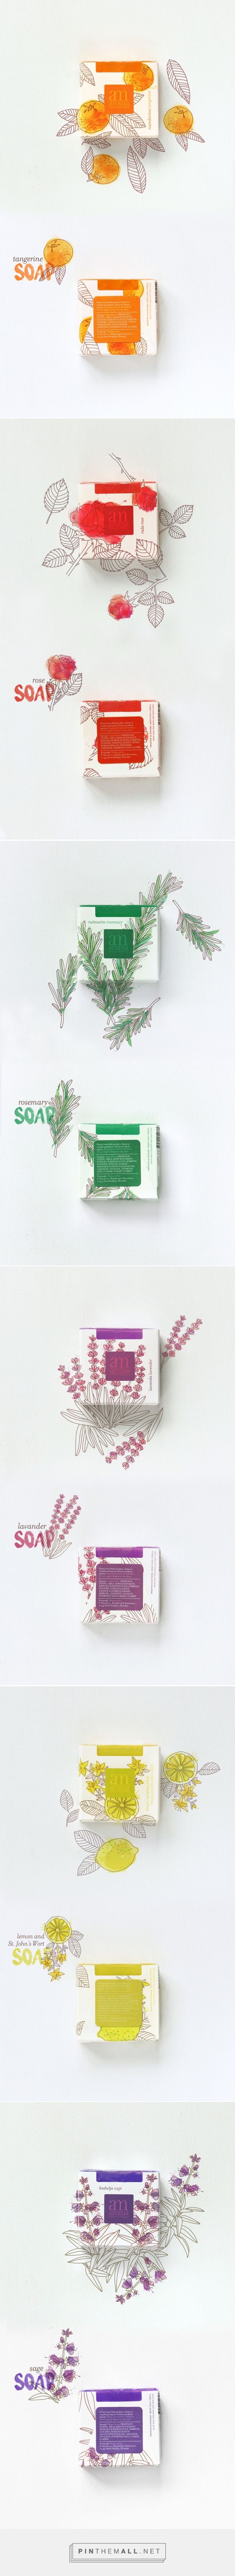 Aroma Mediterranea soaps — The Dieline - Branding & Packaging